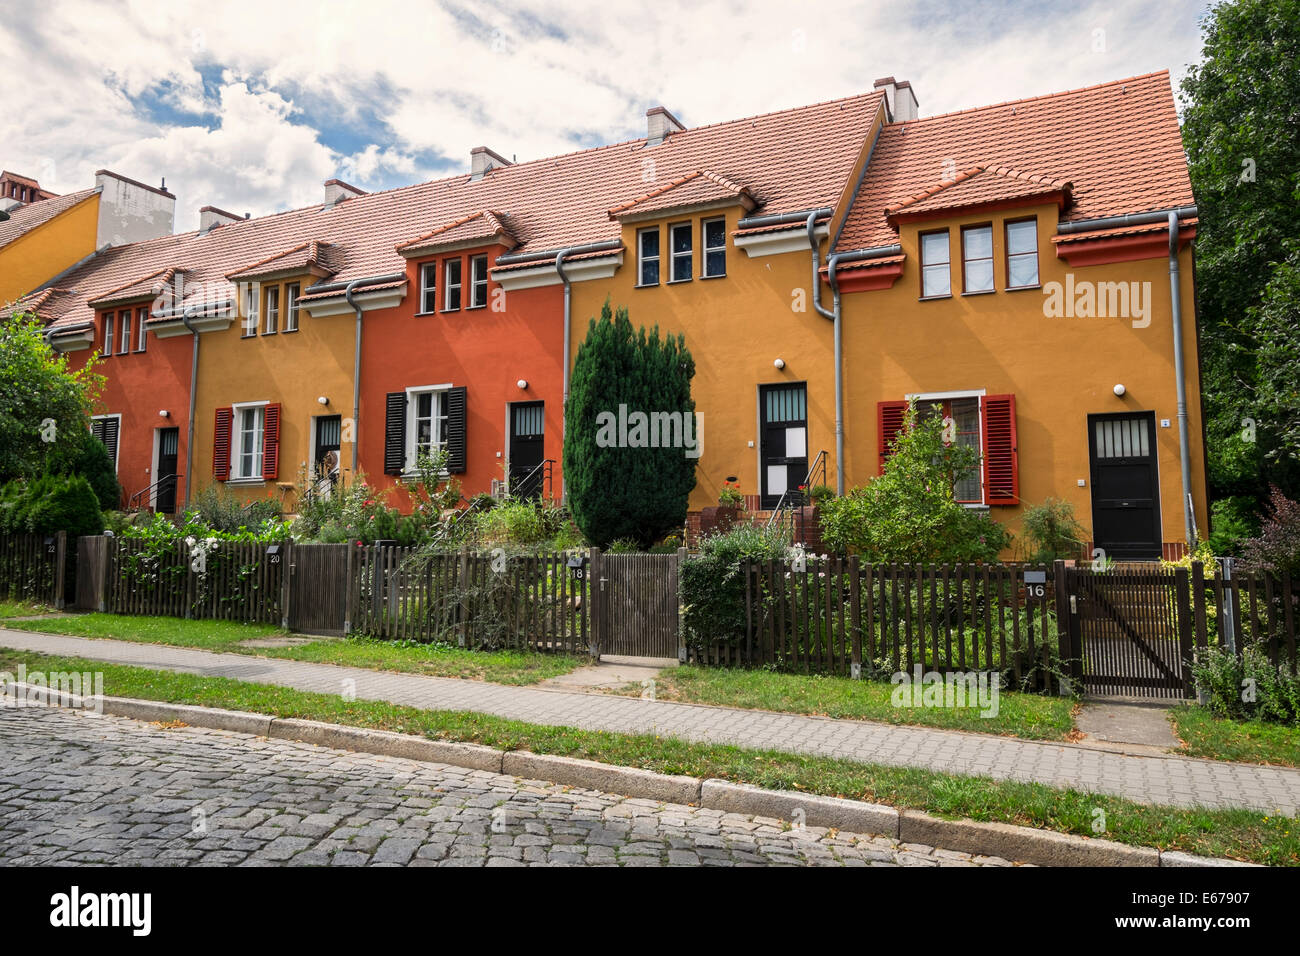 Gartenstadt , (Garden city), housing estate a UNESCO world Heritage site at Falkenberg in Berlin Germany Stock Photo